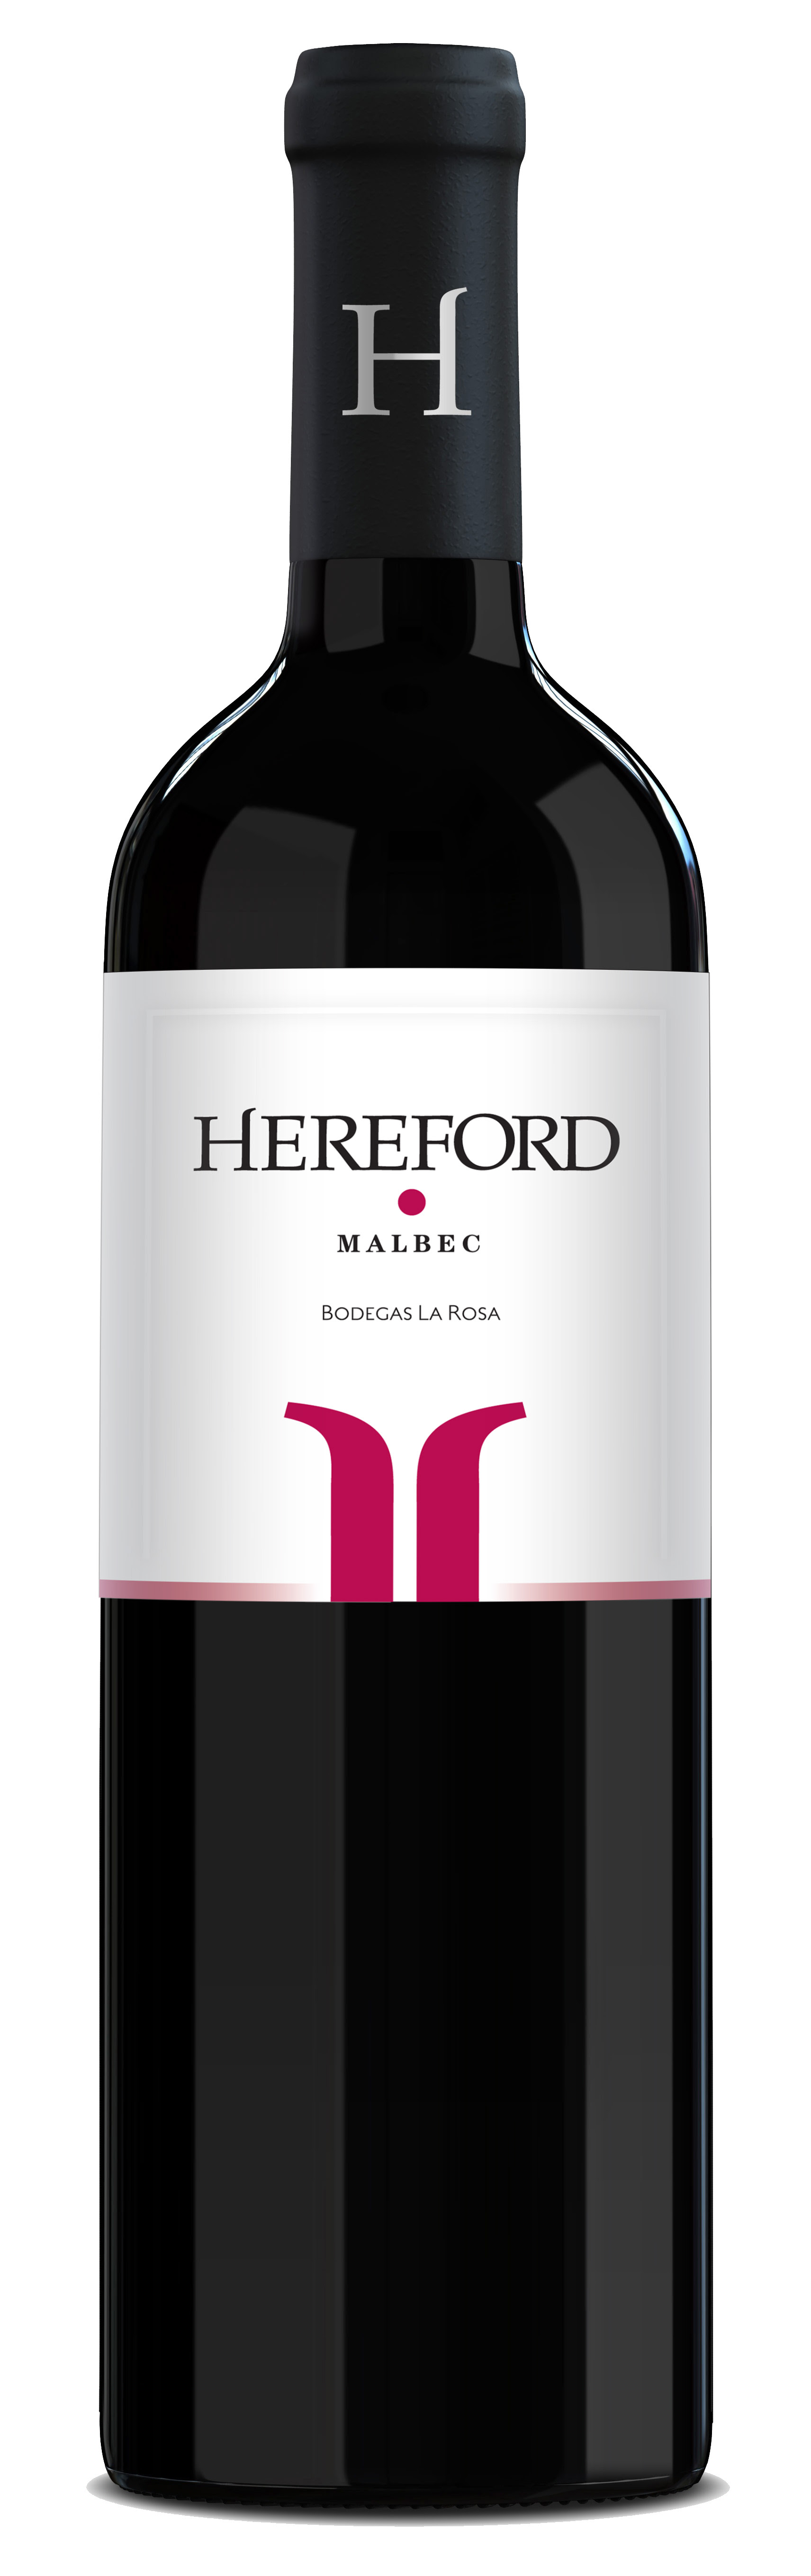 Vinos Hereford Malbec